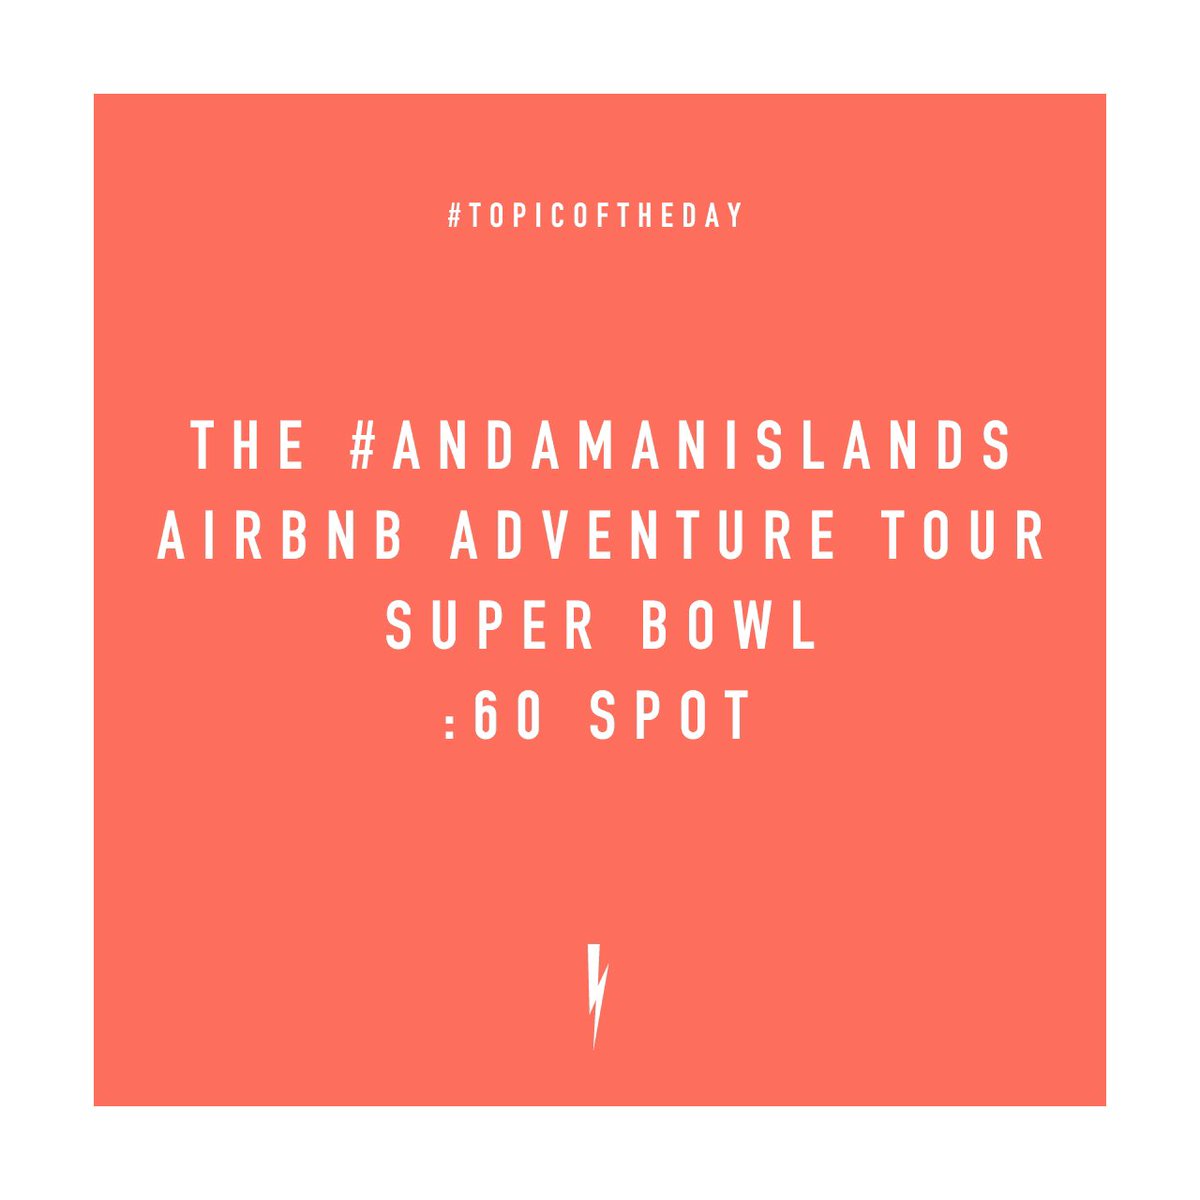 #TopicOfTheDay THE #ANDAMANISLANDS AIRBNB ADVENTURE TOUR SUPER BOWL :60 SPOT